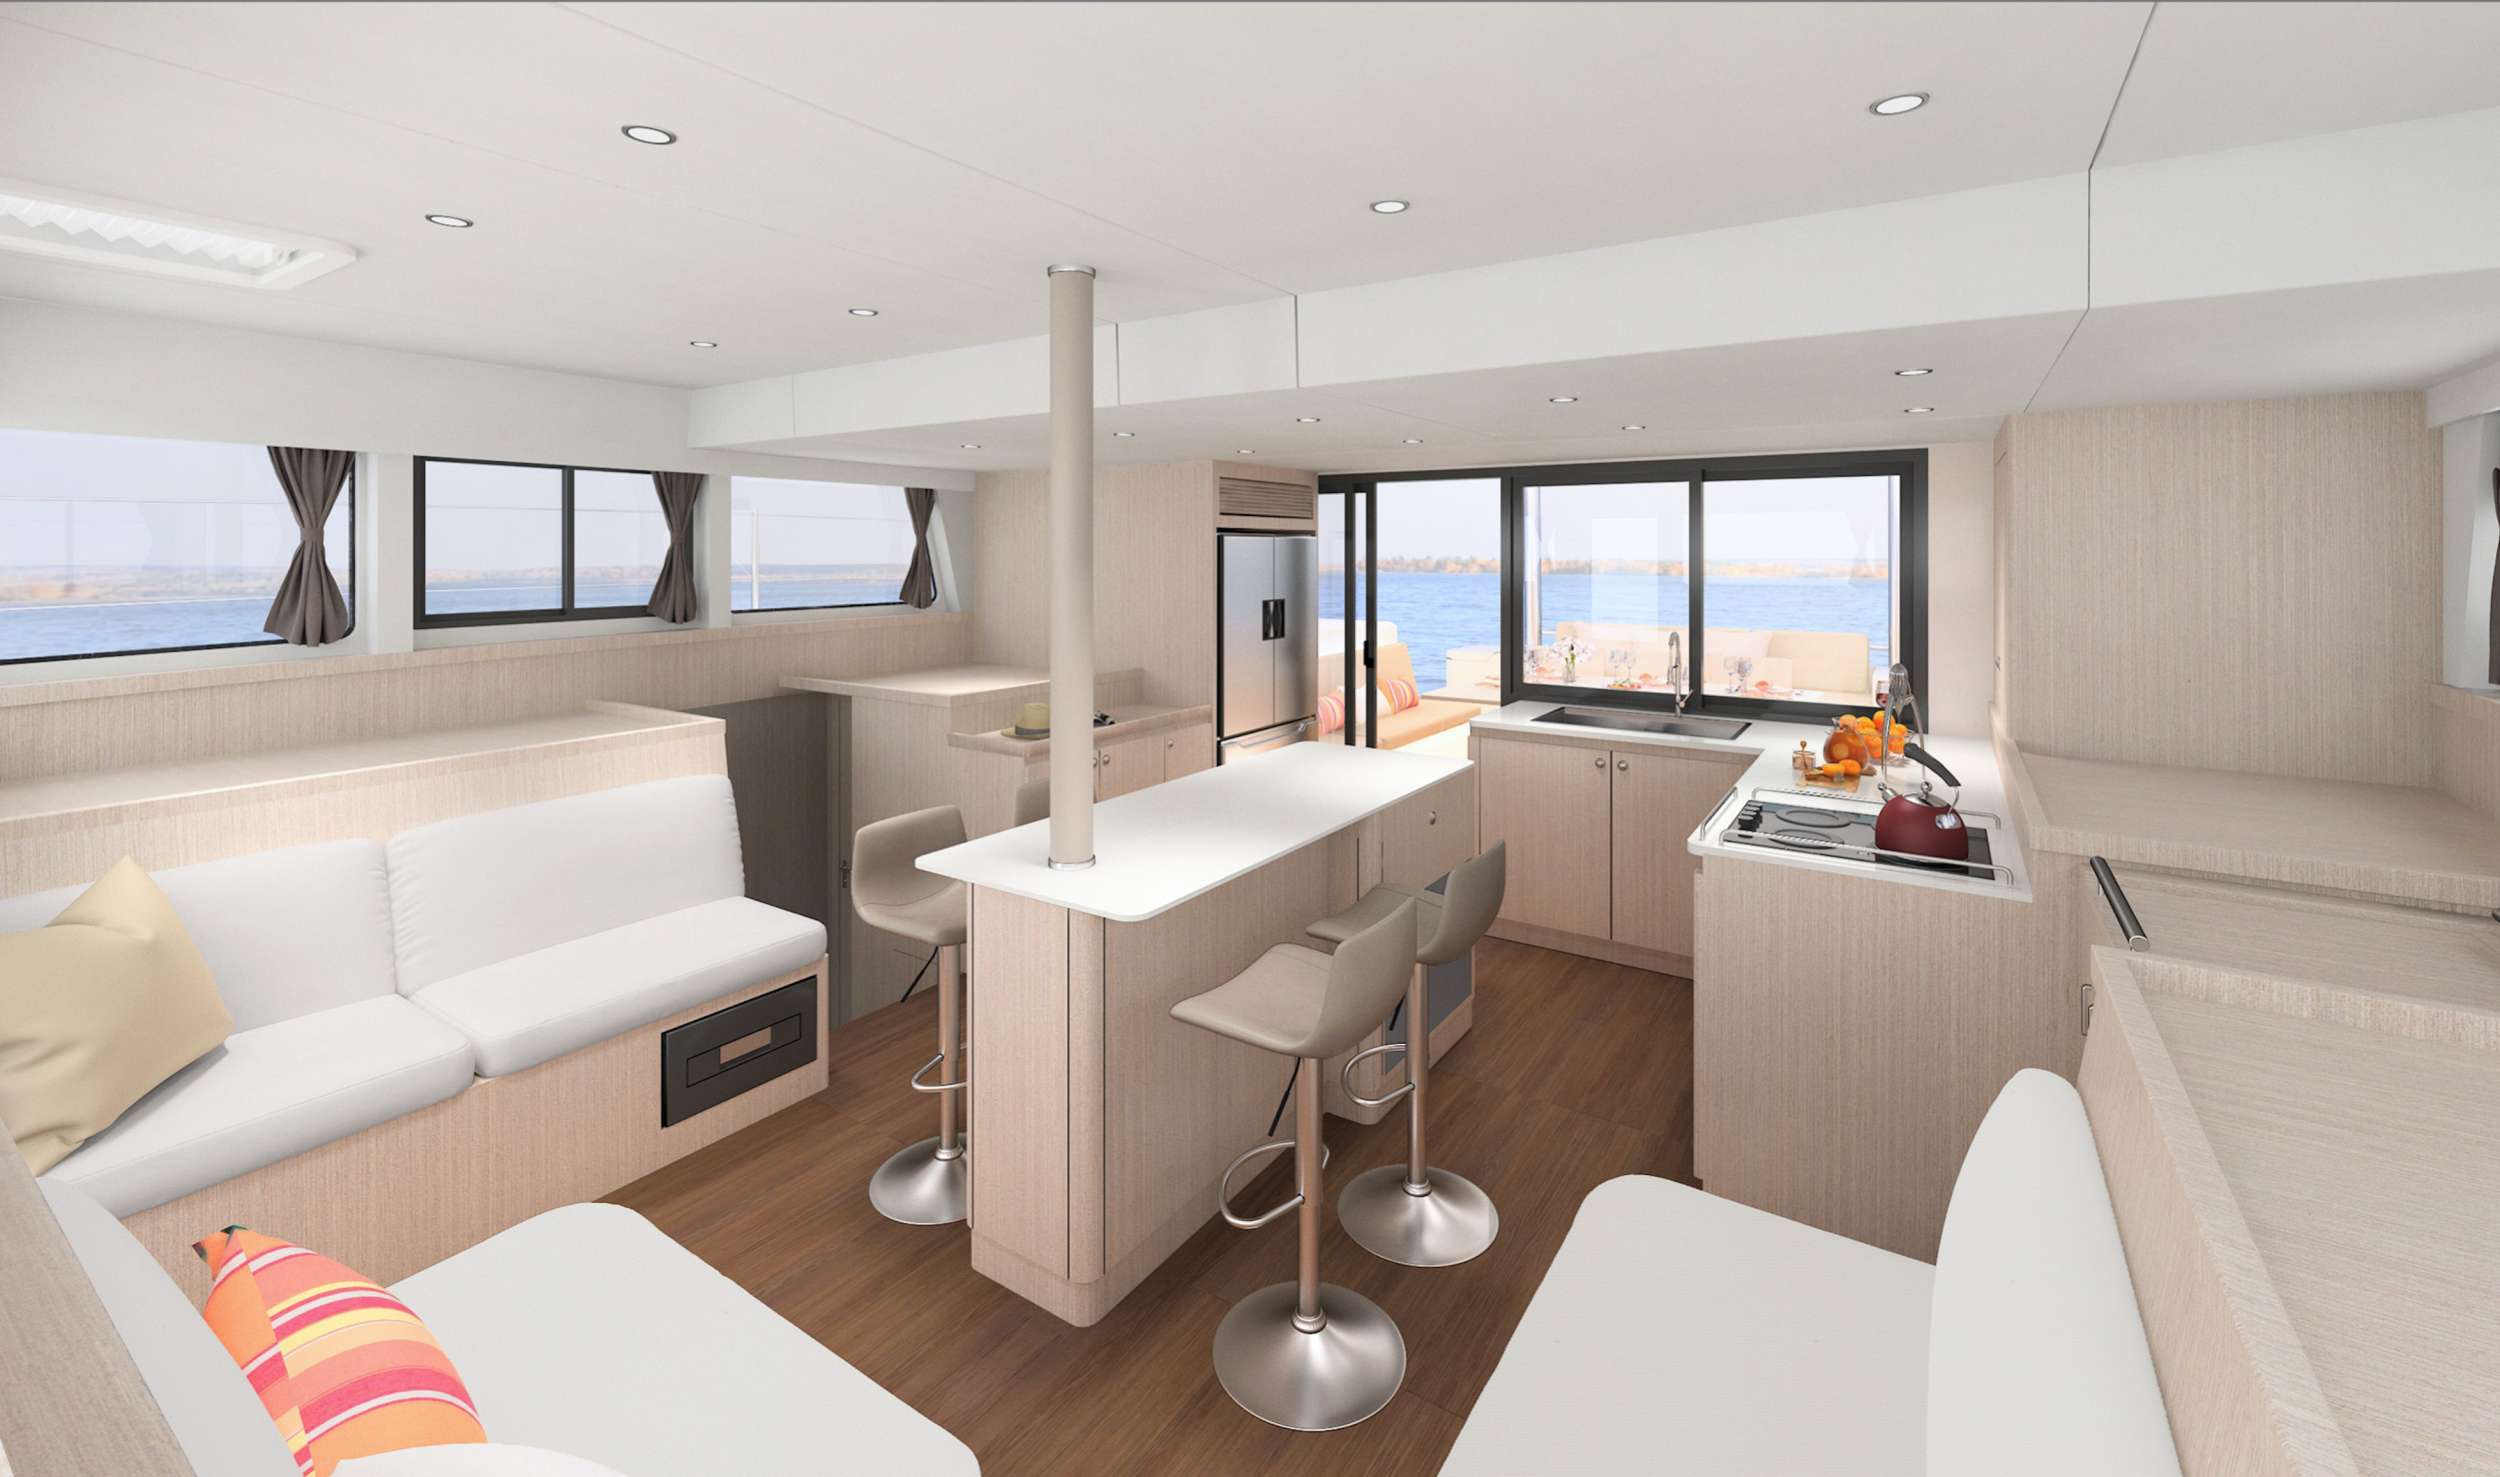 FLOR DE LUNA - Luxury yacht charter British Virgin Islands & Boat hire in Caribbean 4